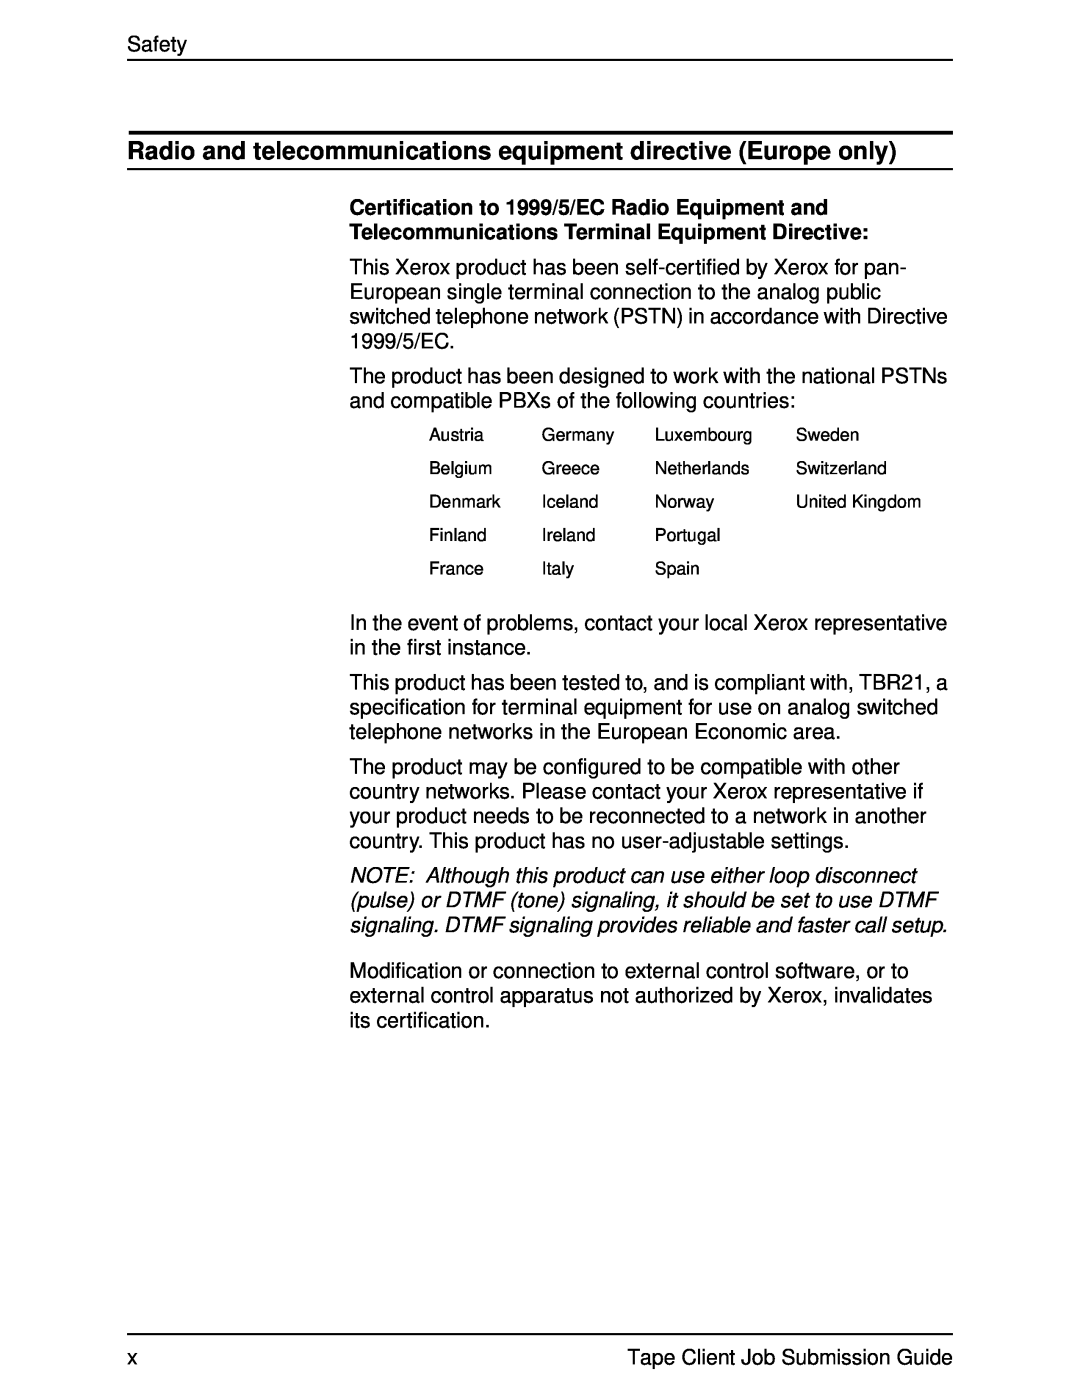 Xerox 701P21110 manual Certification to 1999/5/EC Radio Equipment and, Telecommunications Terminal Equipment Directive 